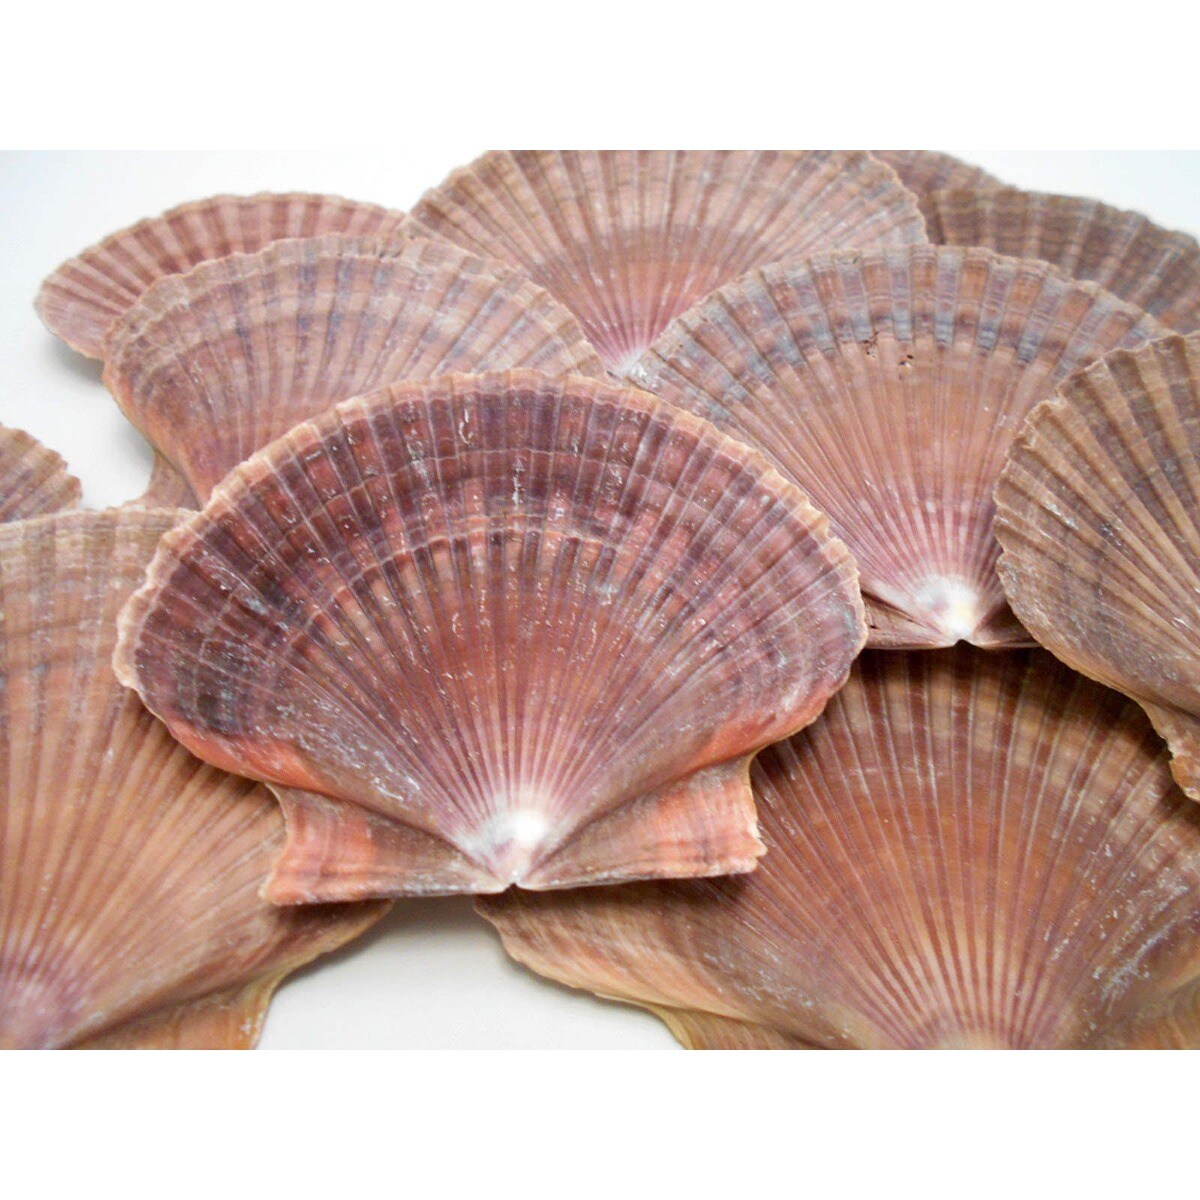 3 Inches Flat Scallop Shells 12 pcs